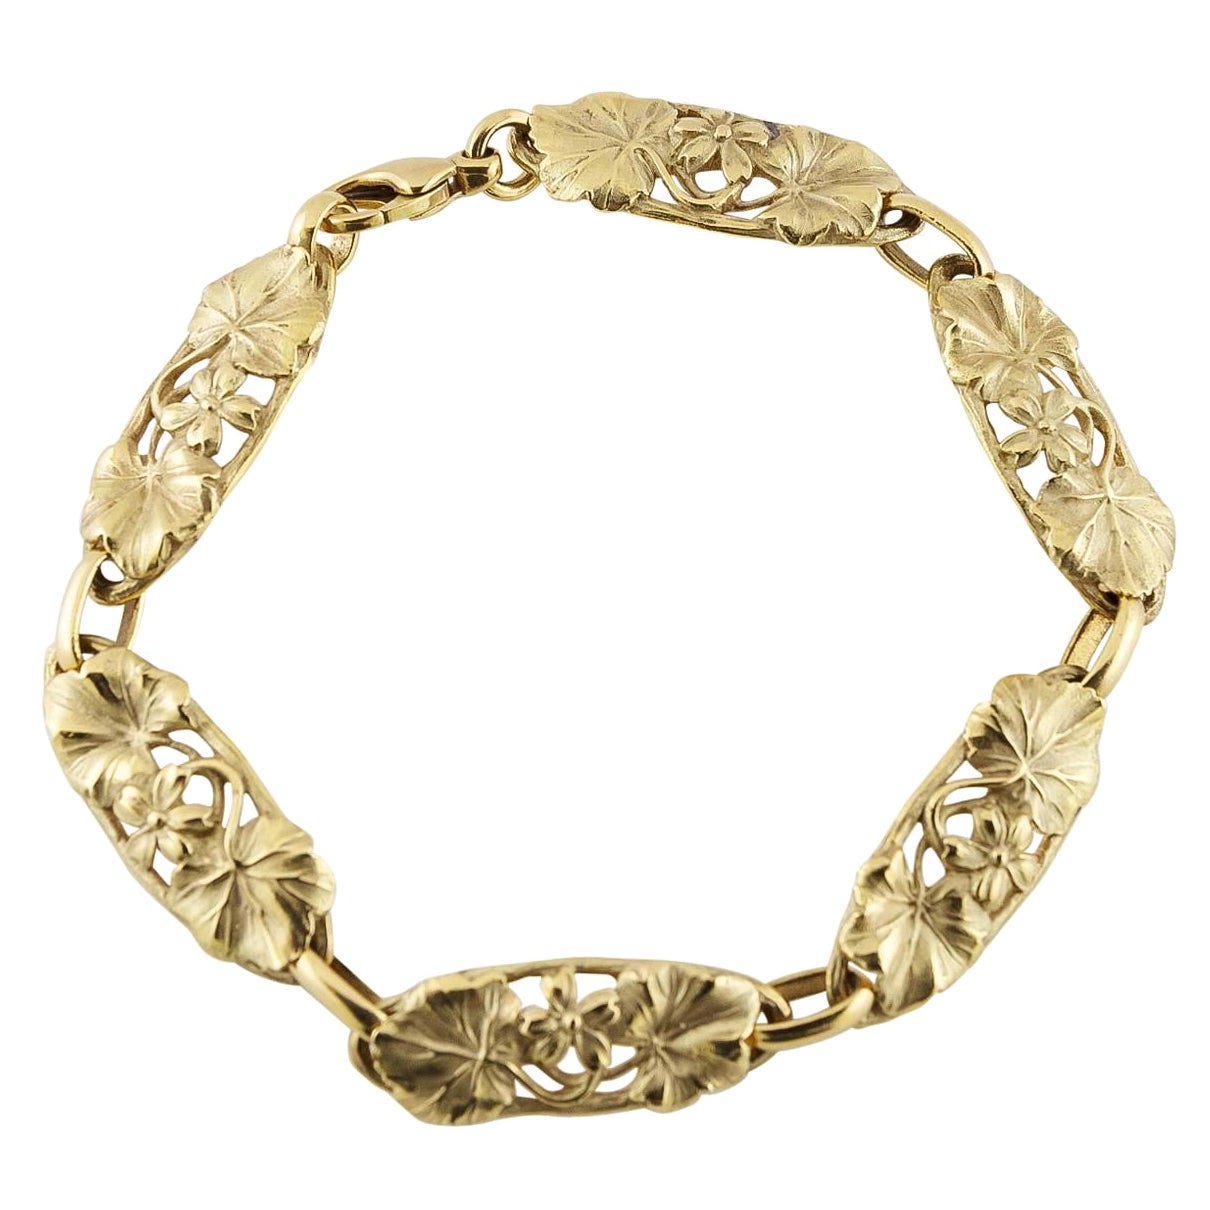 Arnould Art Nouveau 18K Gold Link Bracelet Re-Edition with Flowers and Vines